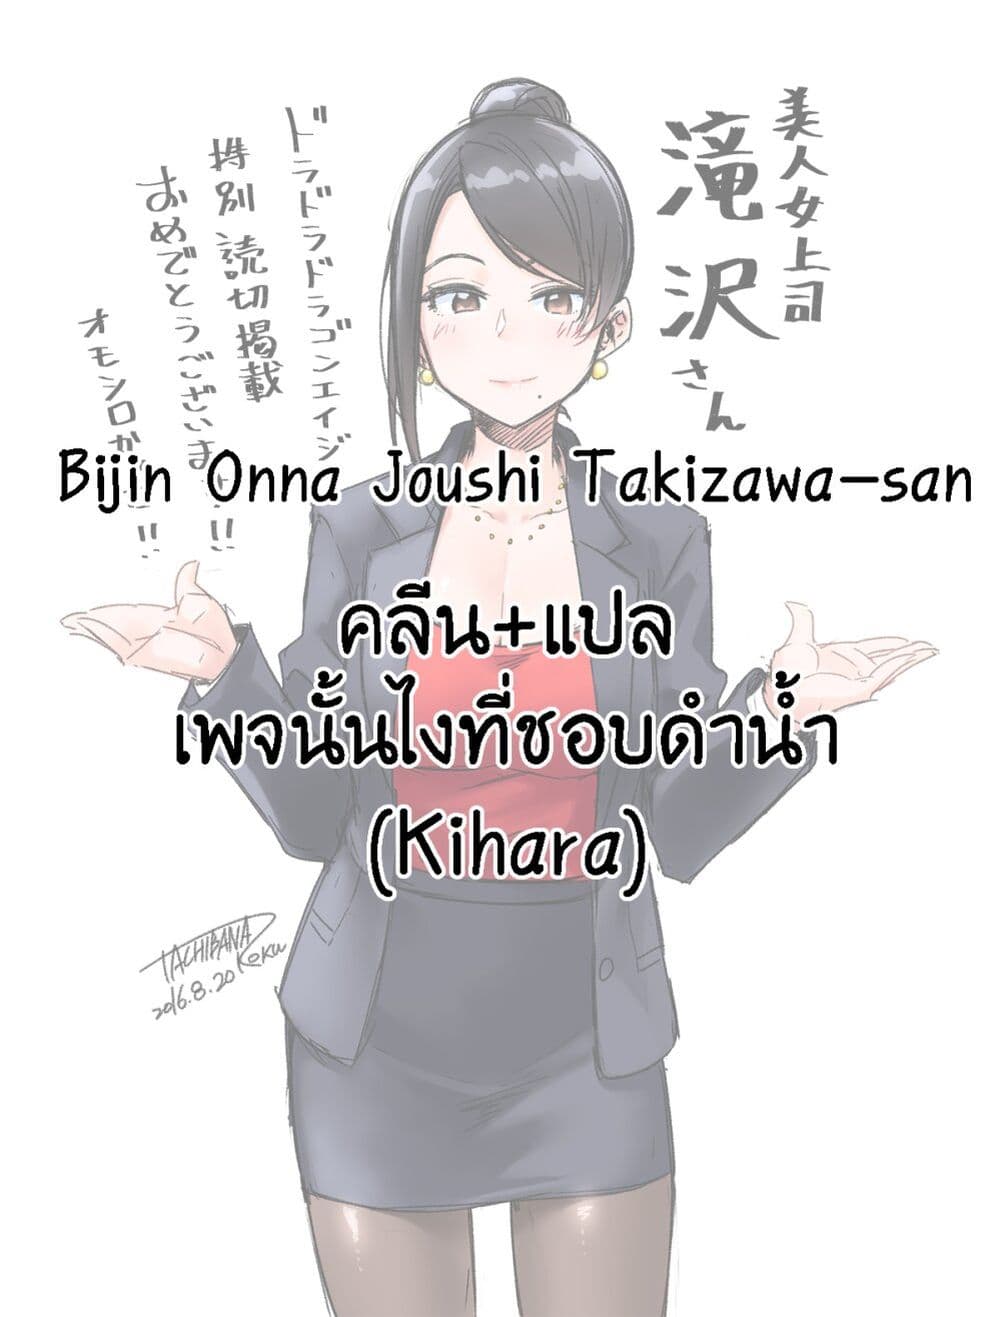 Bijin Onna Joushi Takizawa-san หัวหน้าสุดสวย ทากิซาวะซัง 6-6